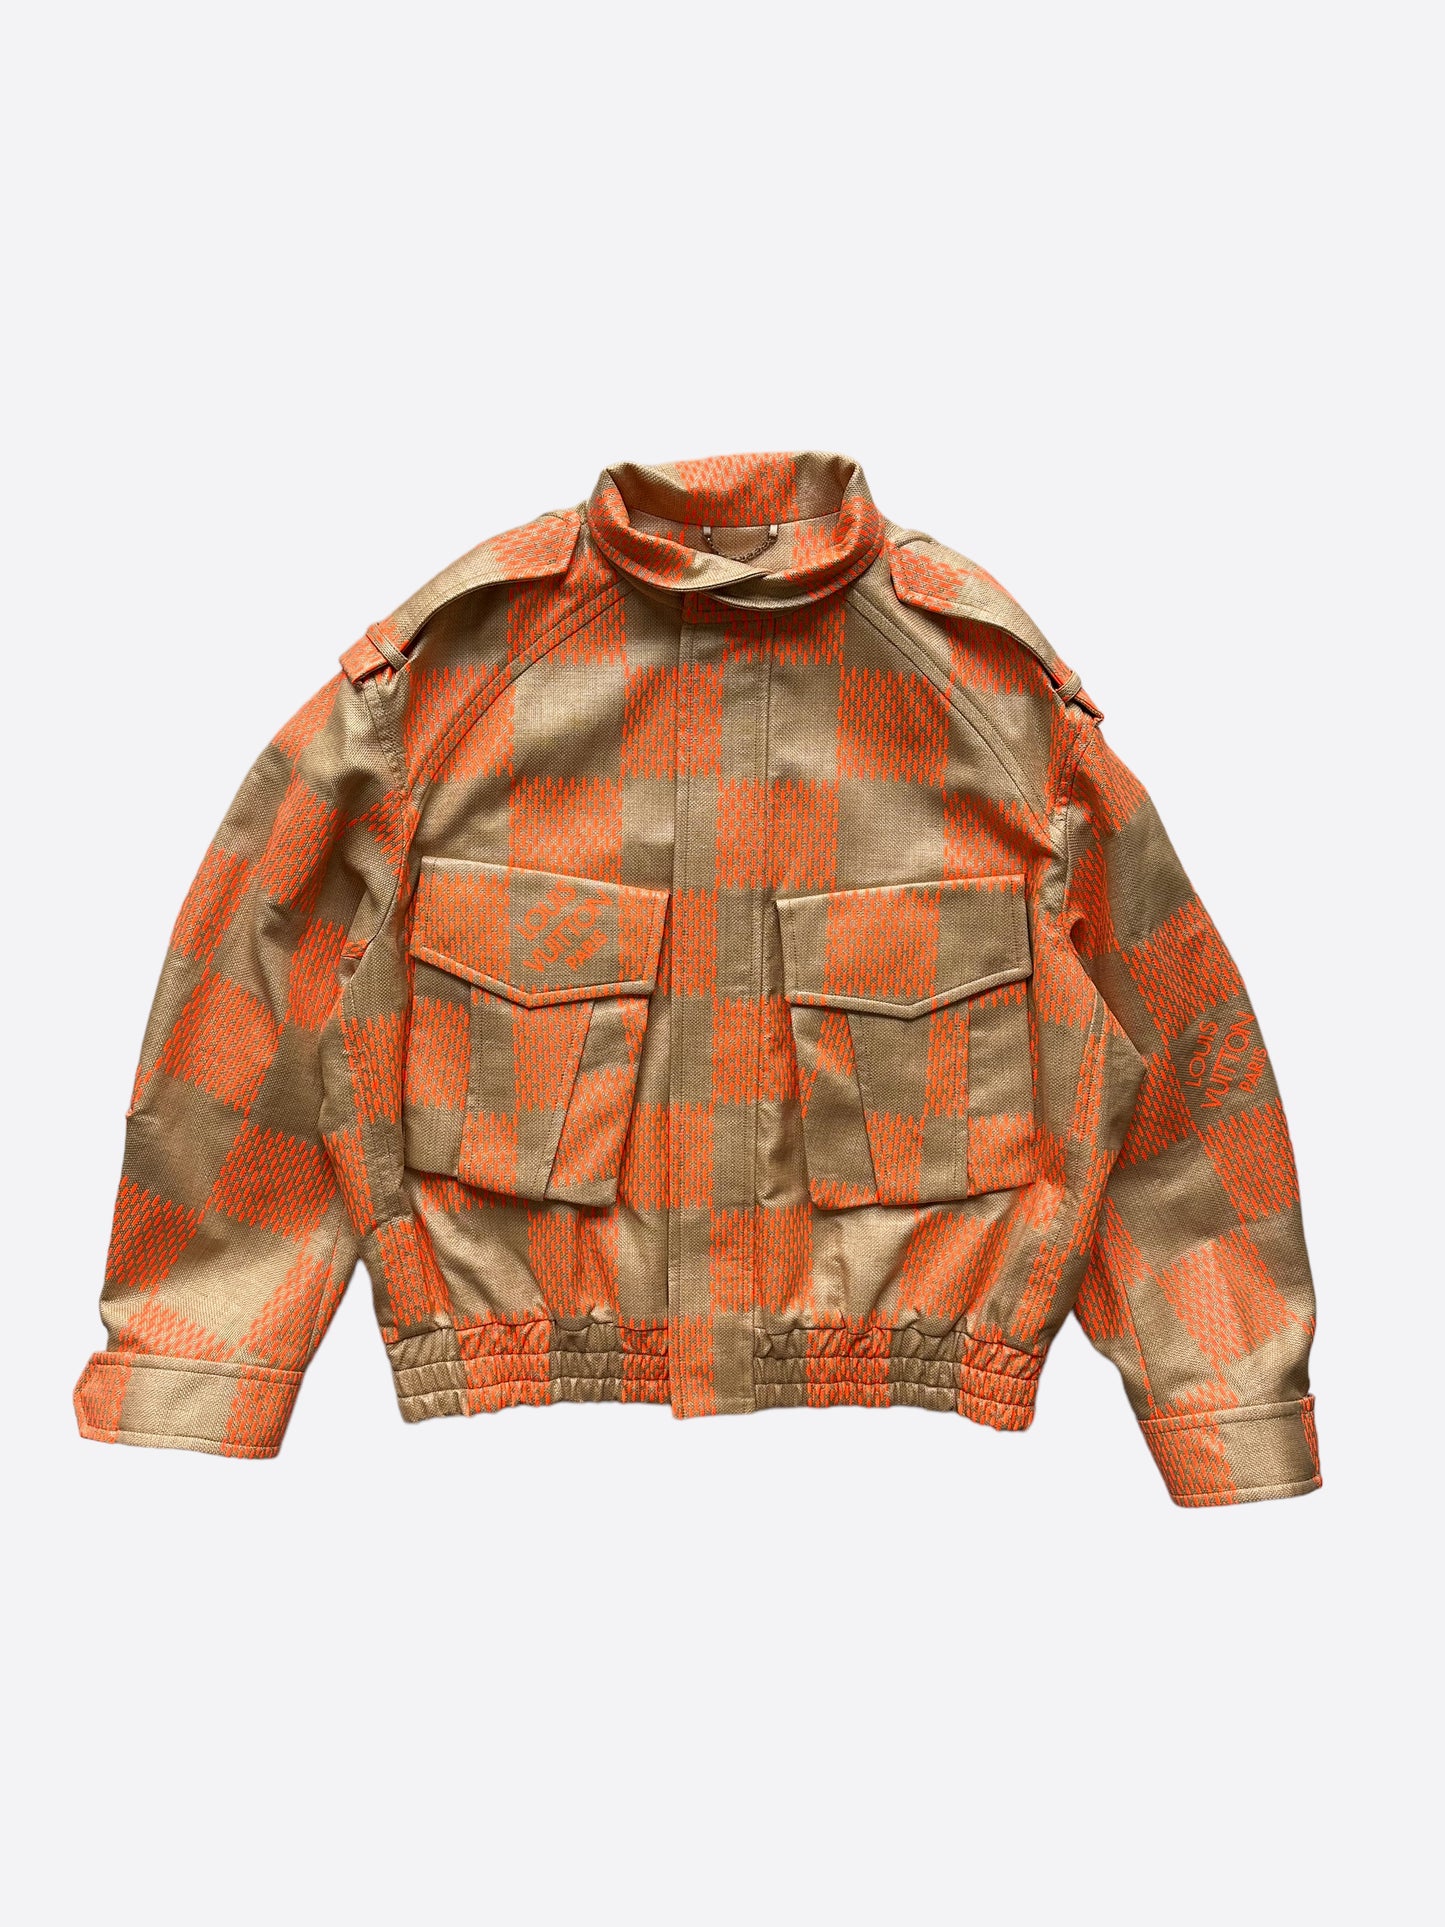 Orange Louis Vuitton Jacket